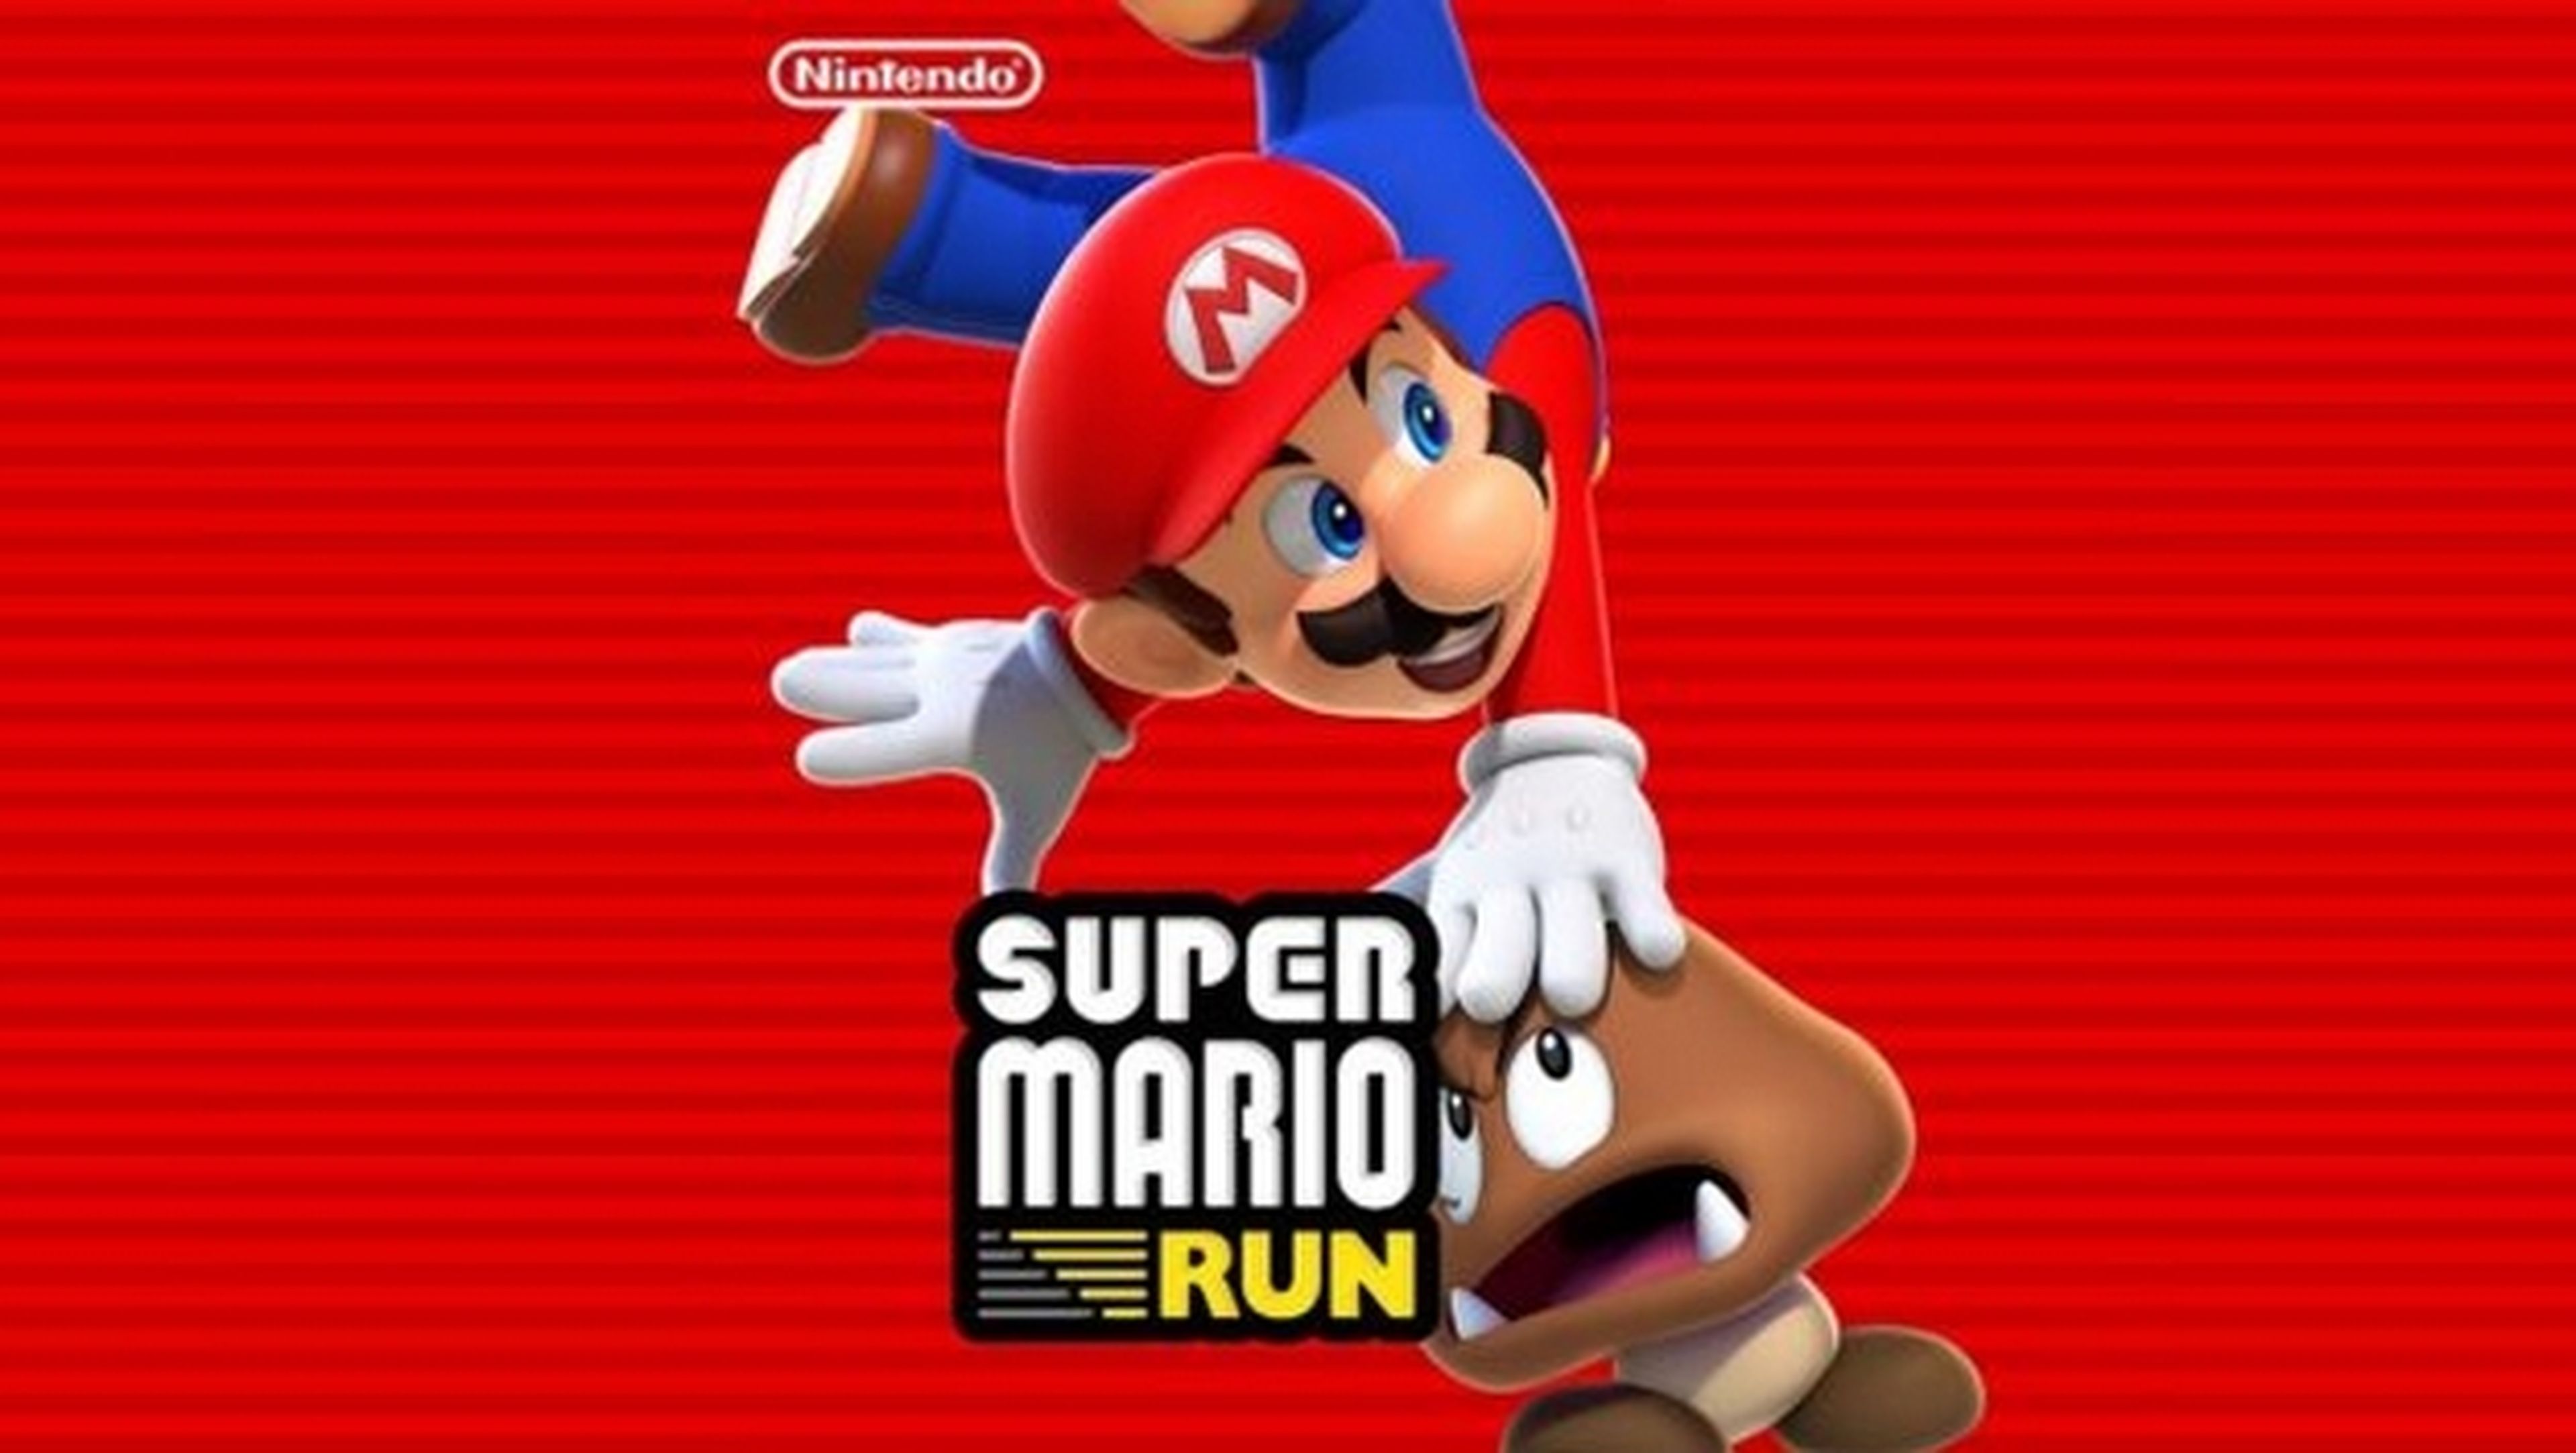 Bueno harto Apto Super Mario Run, 10 millones de descargas en 24 horas | Computer Hoy